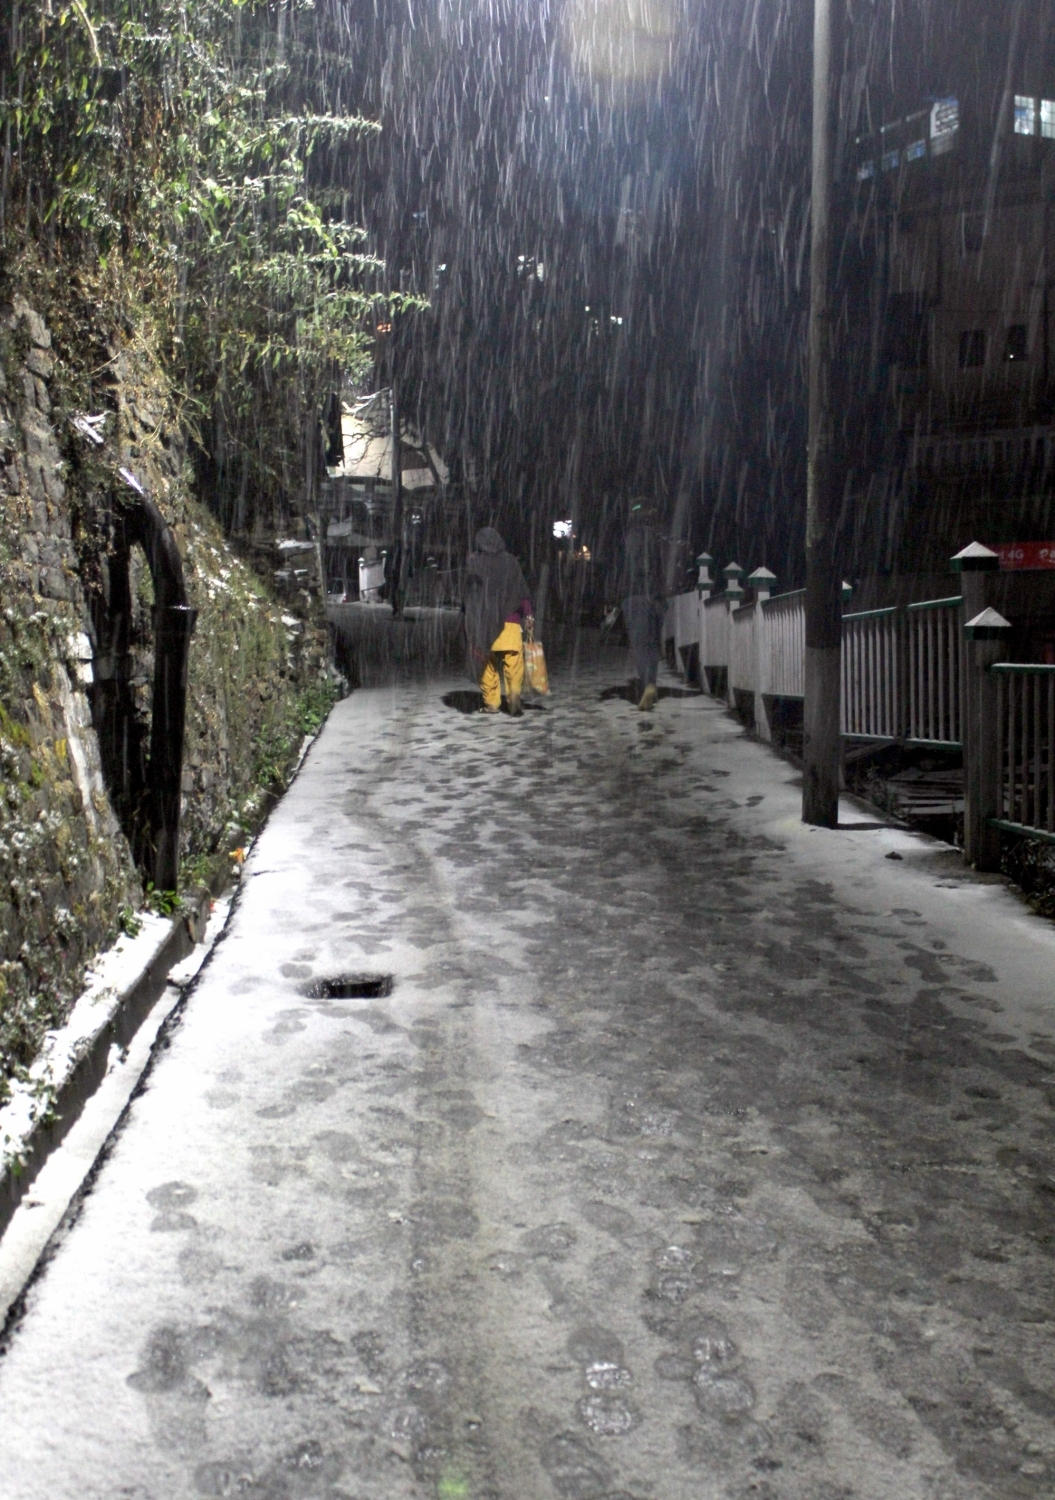 Shimla, Manali cut off after snow, traffic hampered